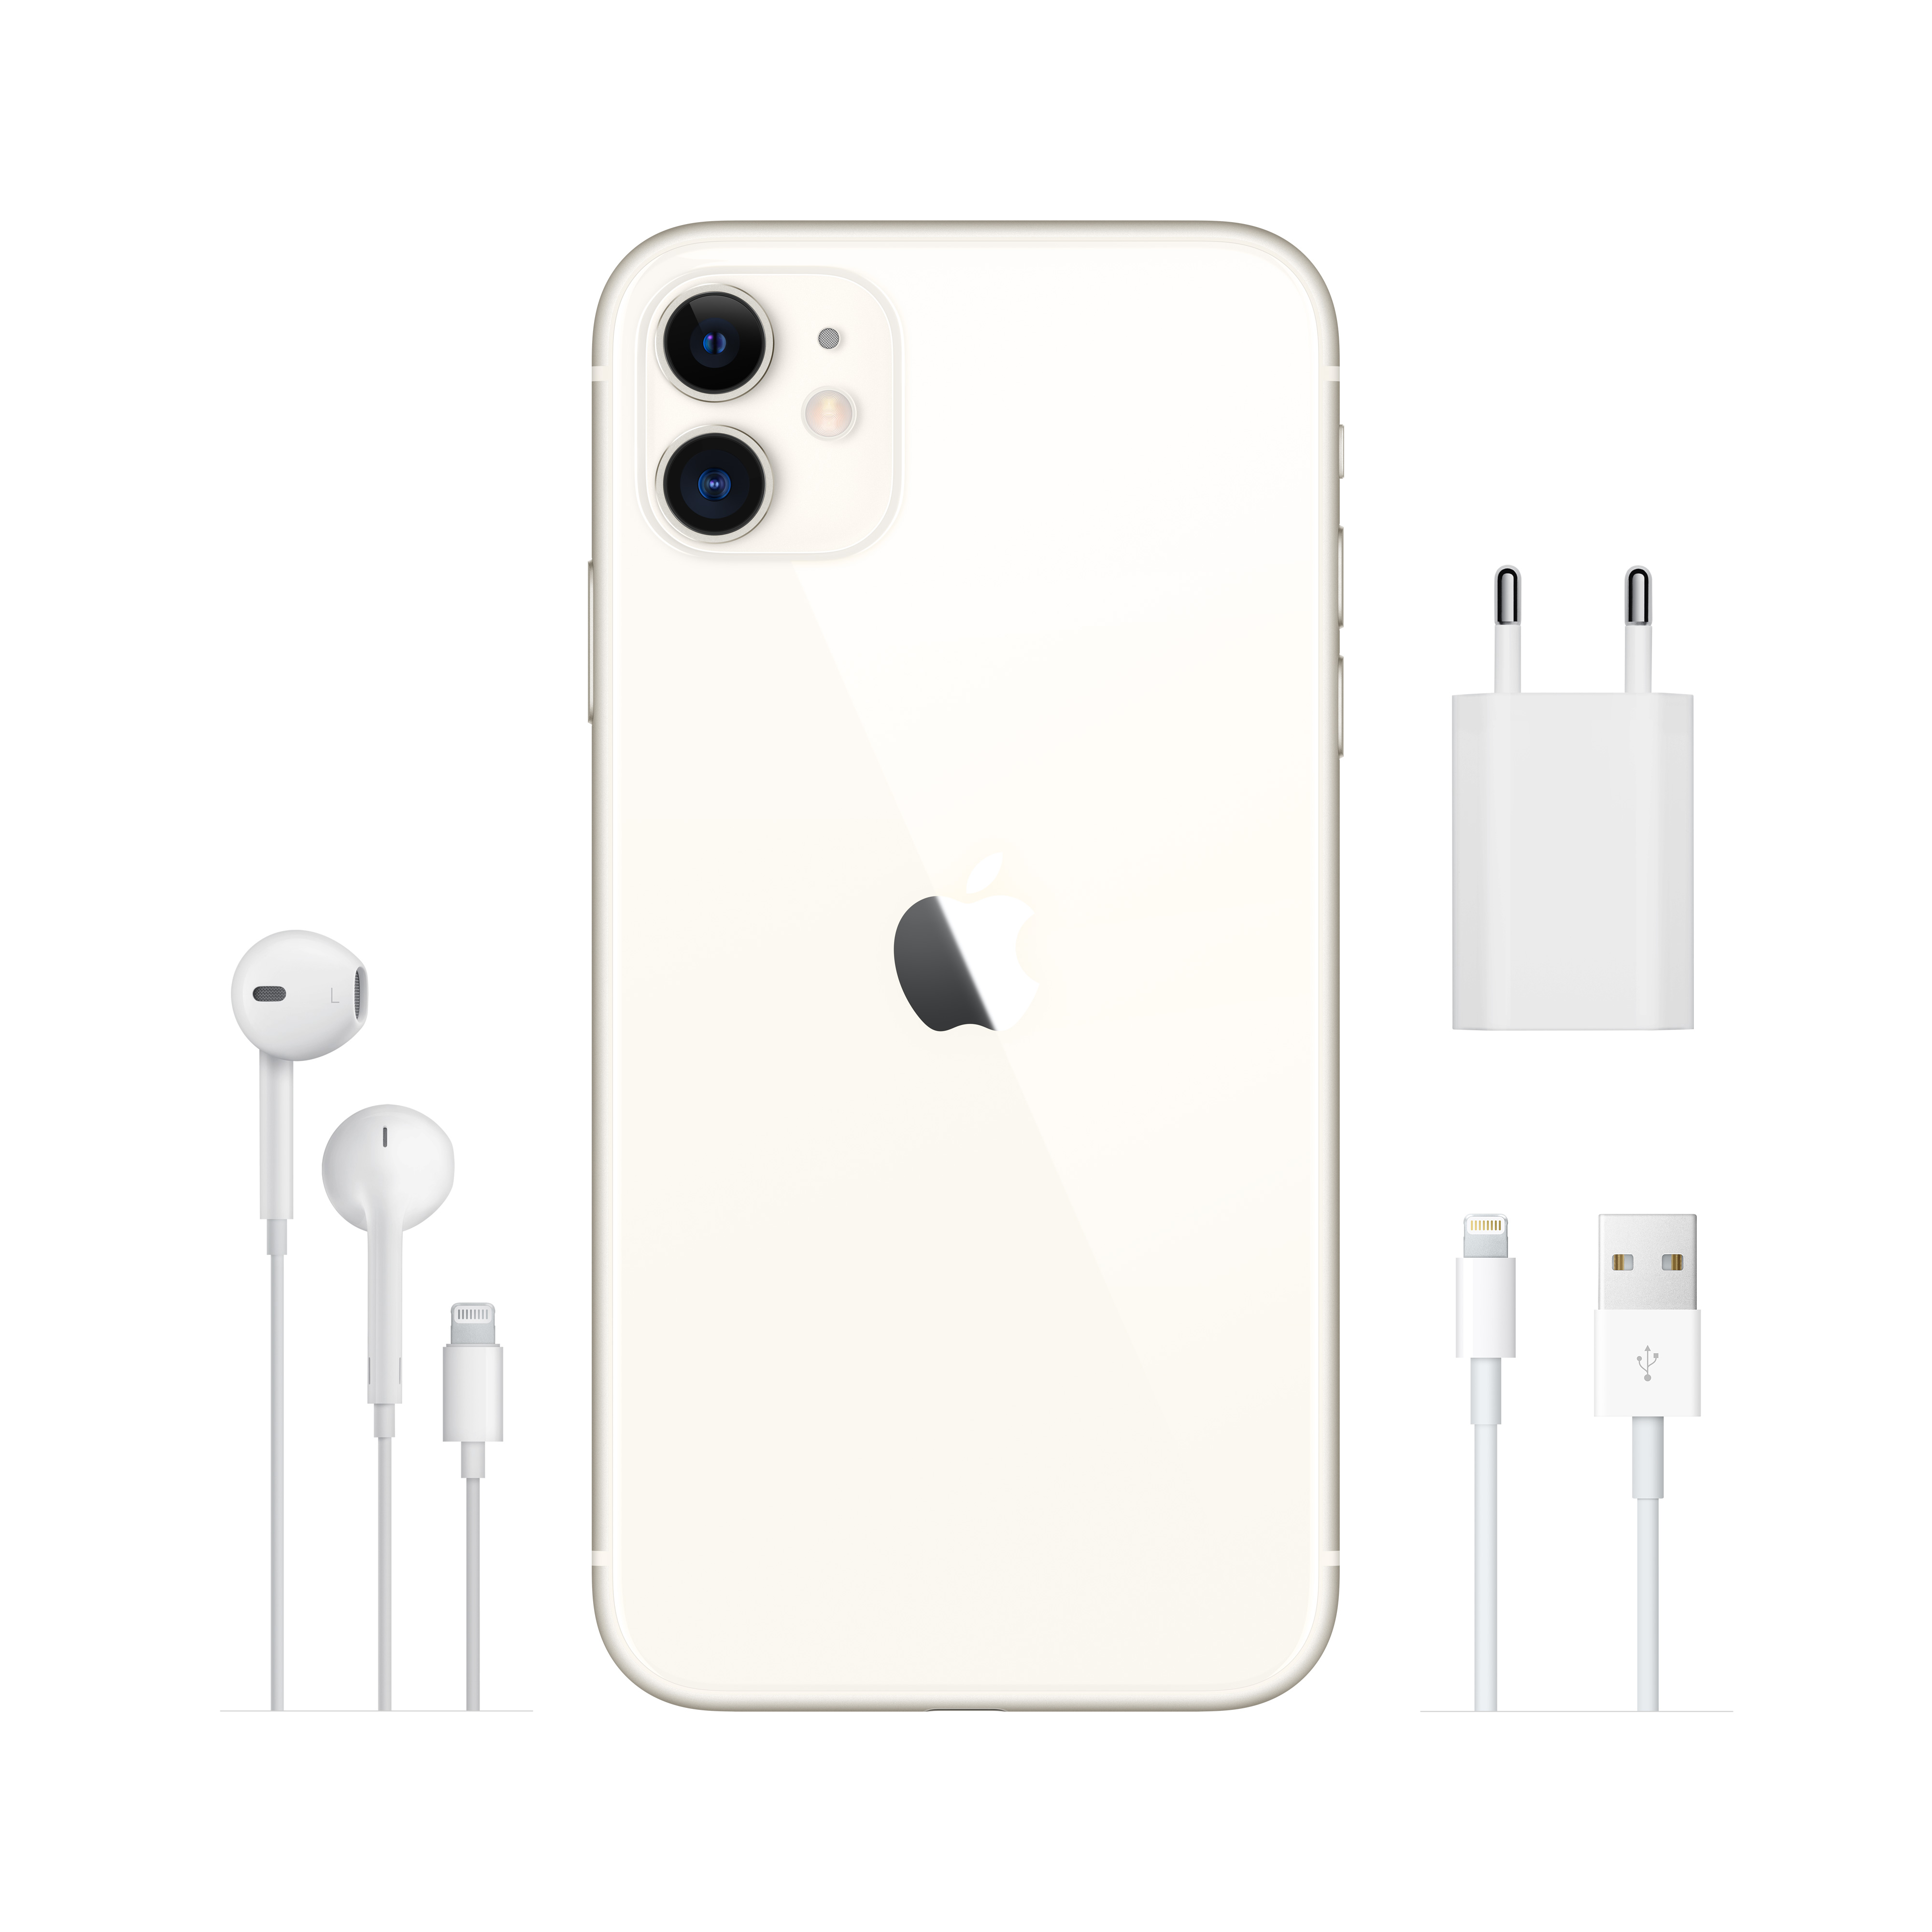 Фото — Apple iPhone 11, 128 ГБ, белый, новая комплектация